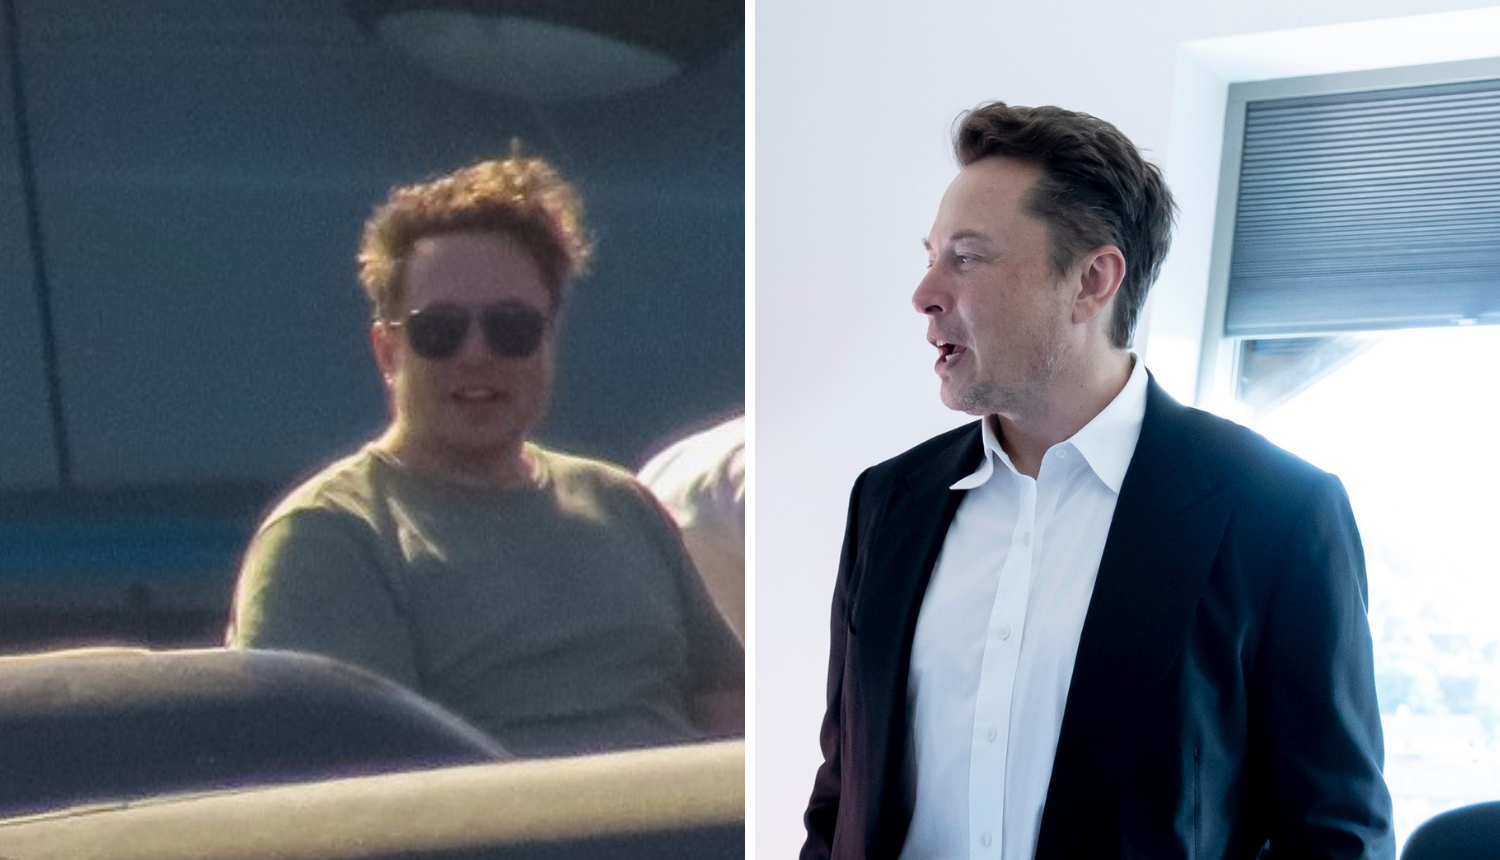 Elon Musk skinuo gotovo deset kilograma: Evo kako izgleda